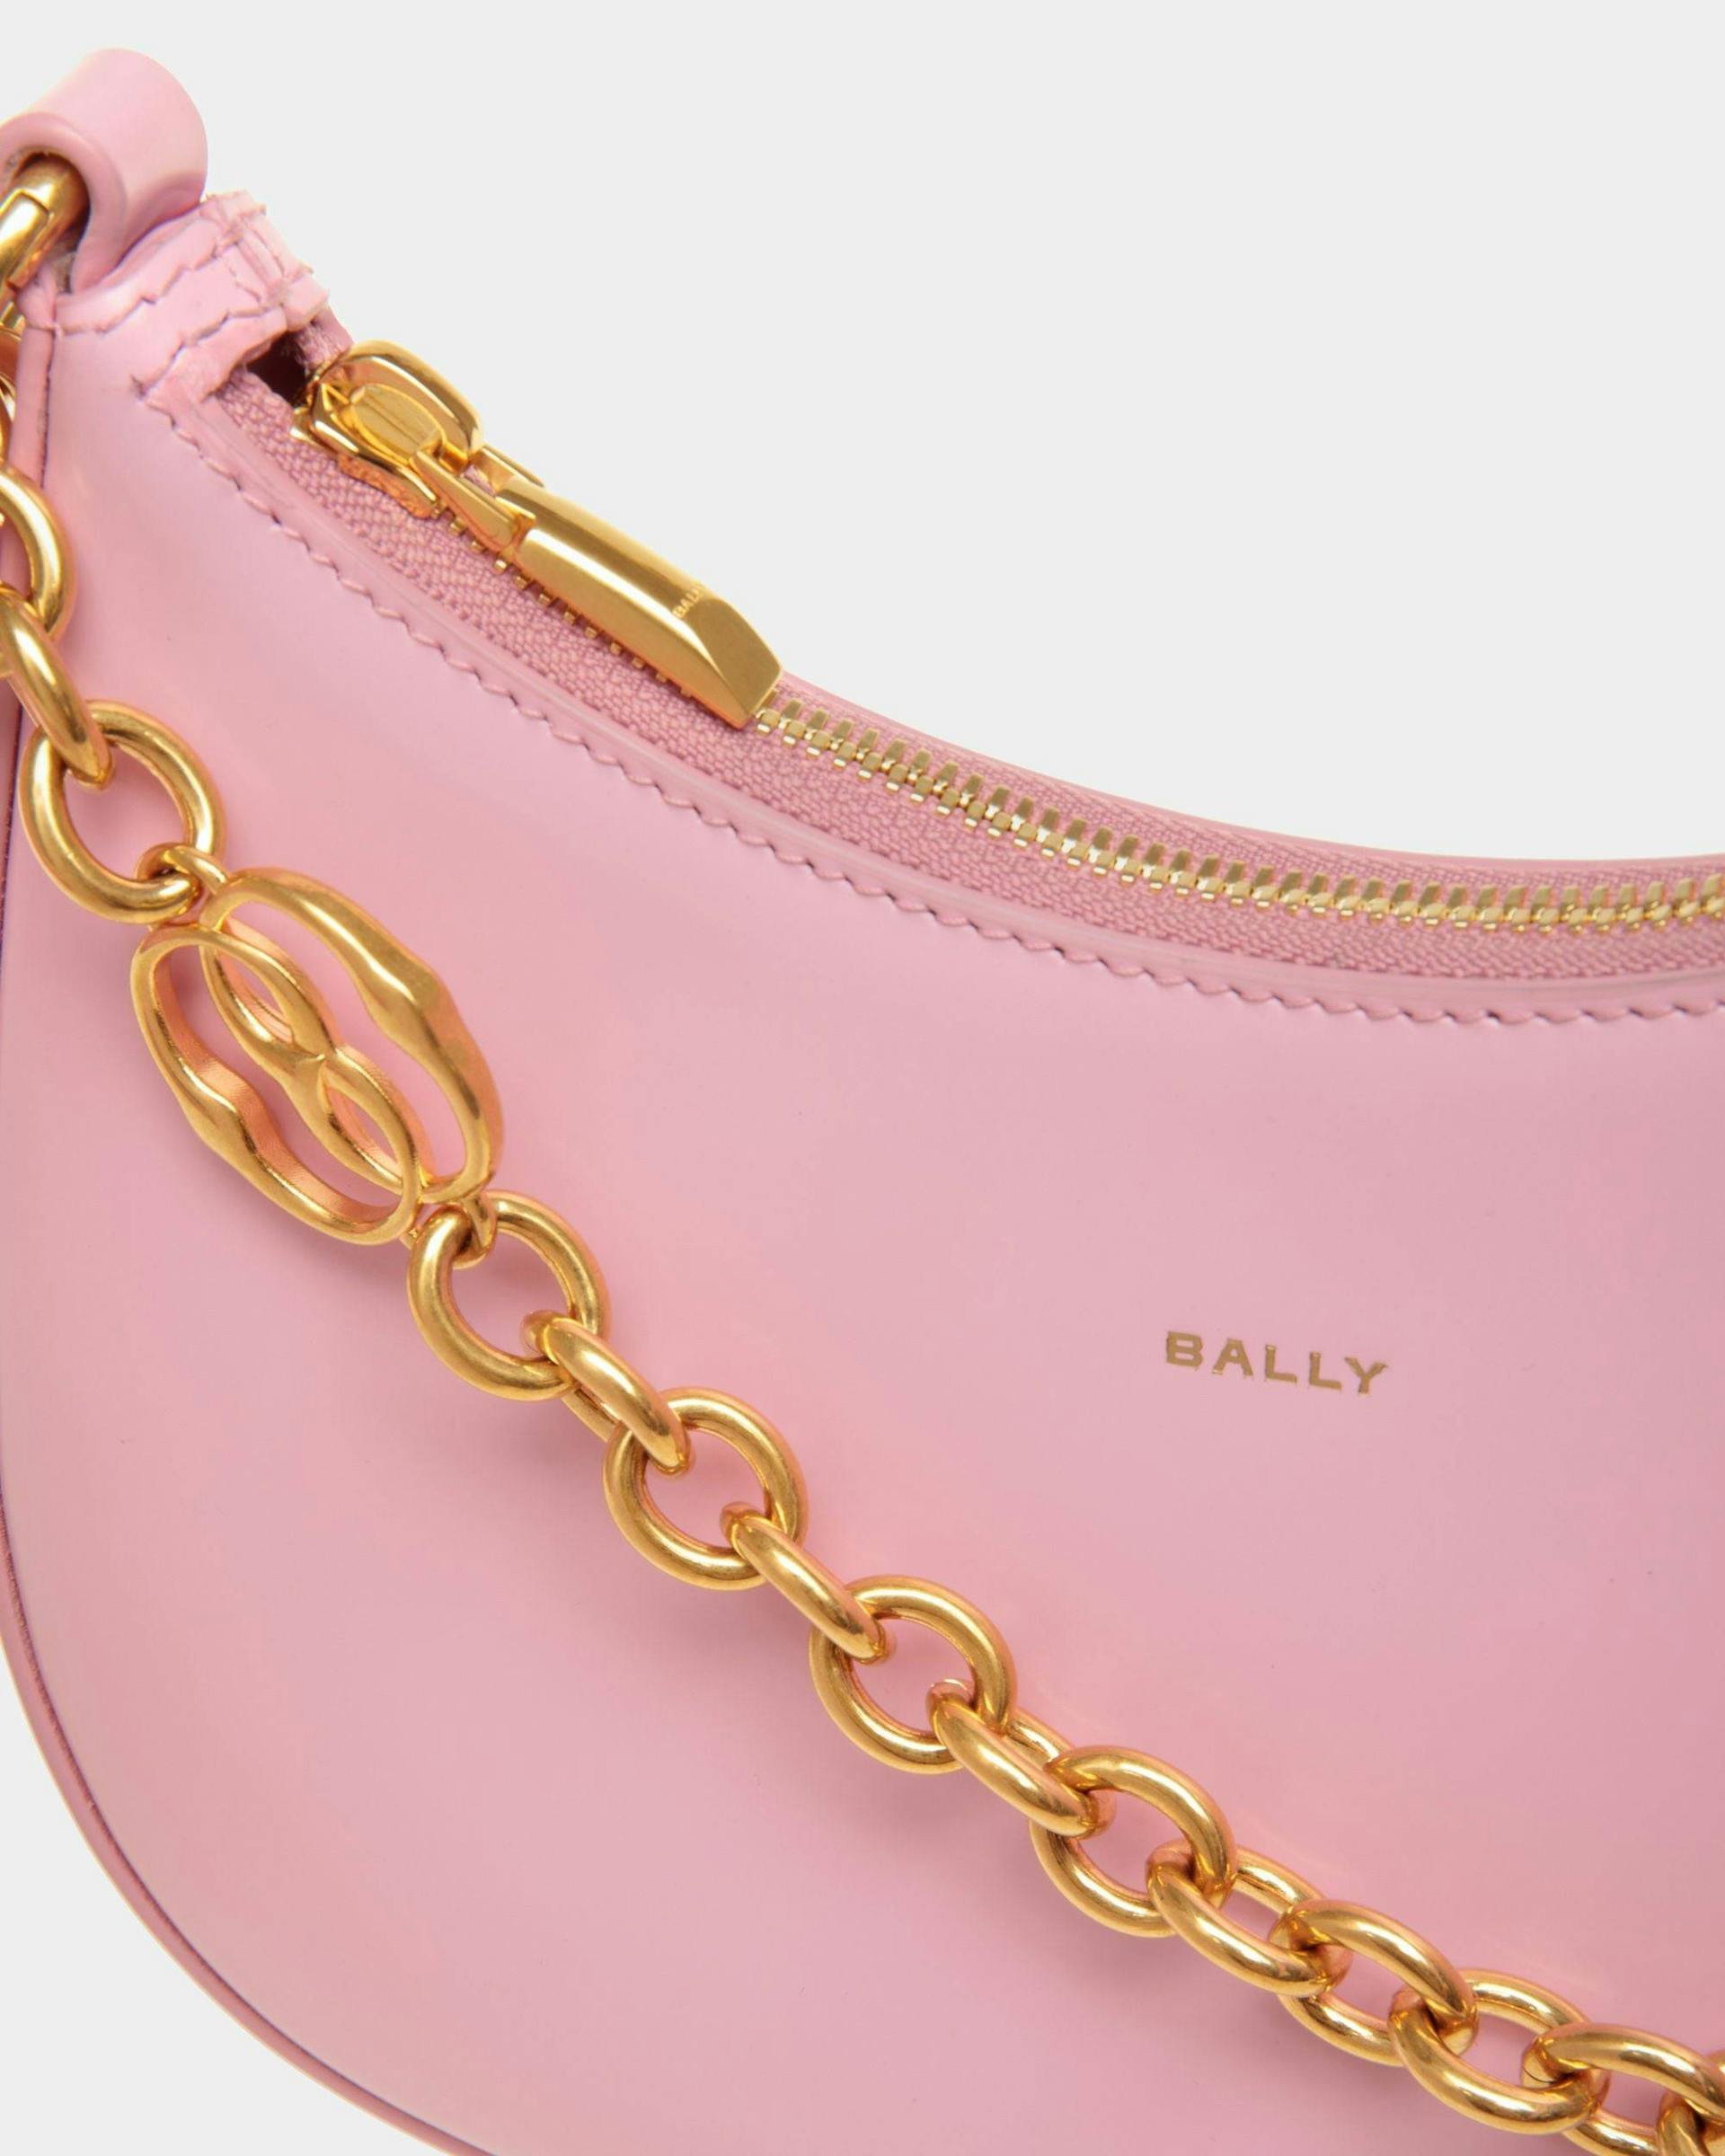 Women's Emblem Mini Crossbody Bag in Pink Patent Leather | Bally | Still Life Detail